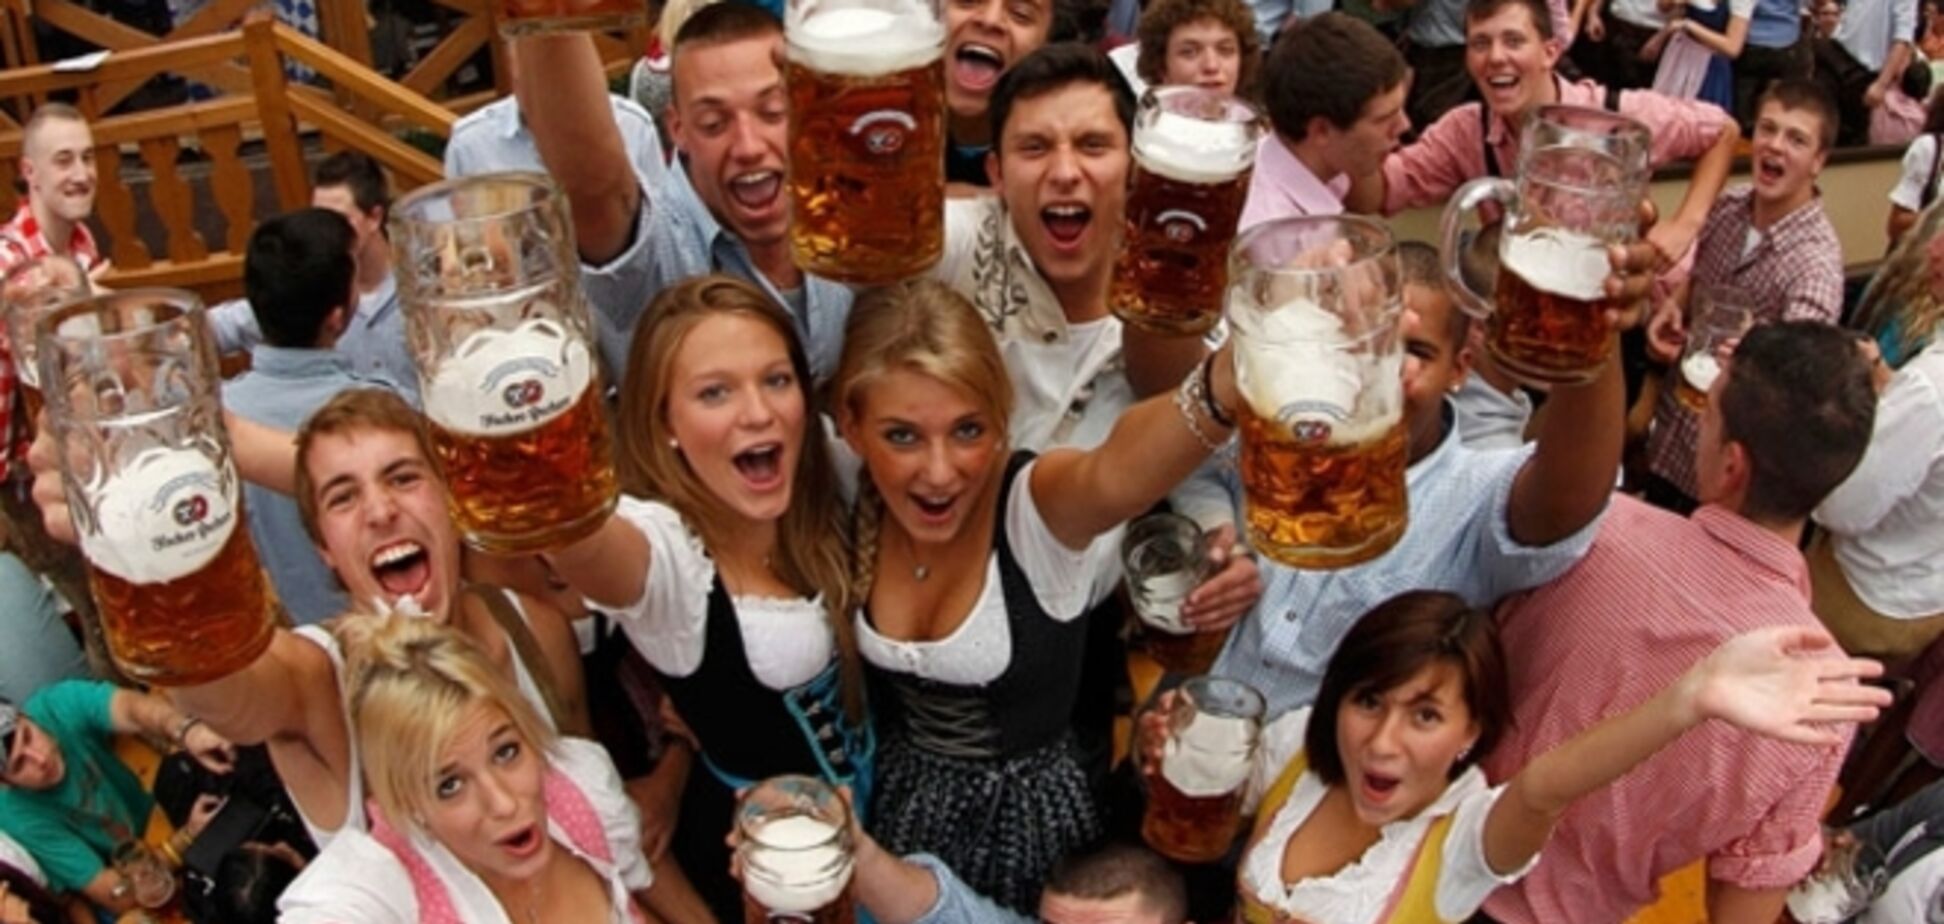 В Мюнхене начался самый масштабный праздник пива 'Октоберфест'